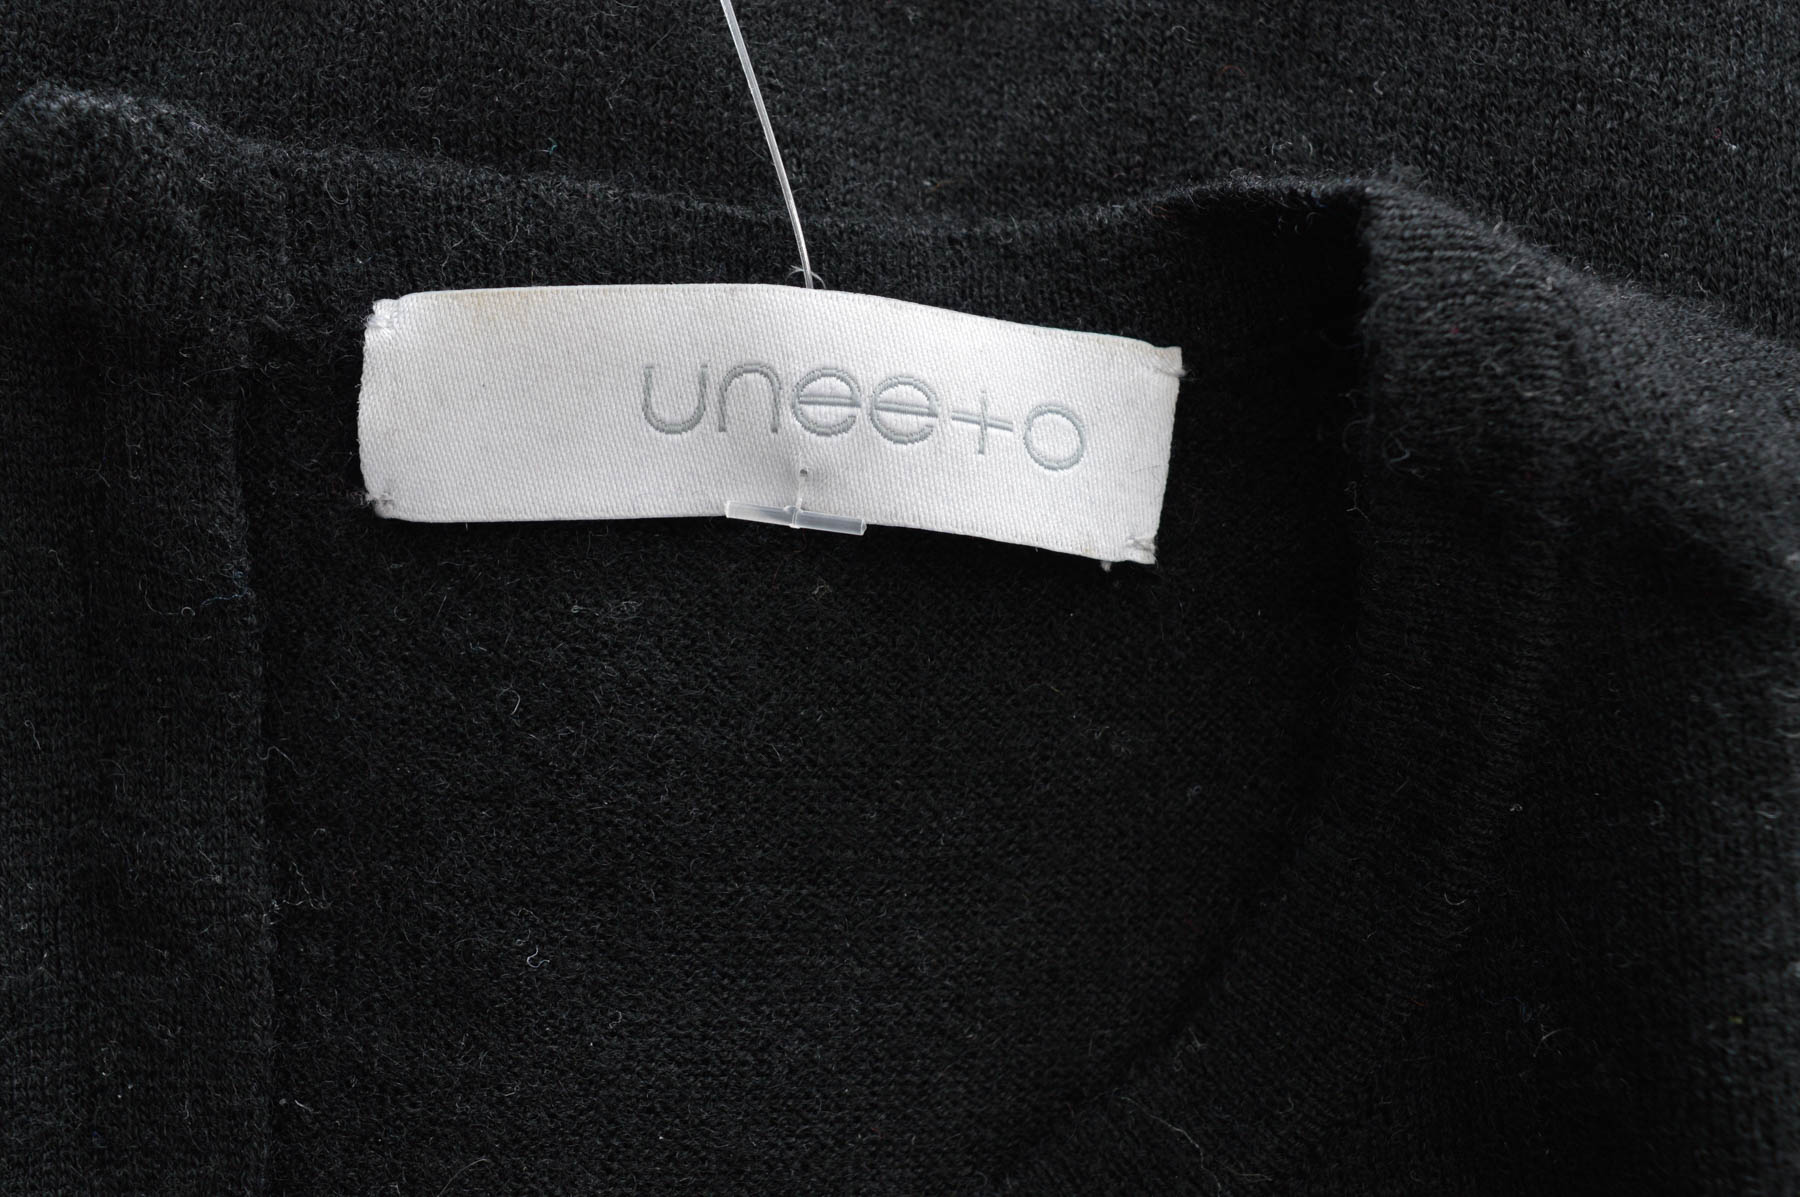 Dress - UNEE+O - 2